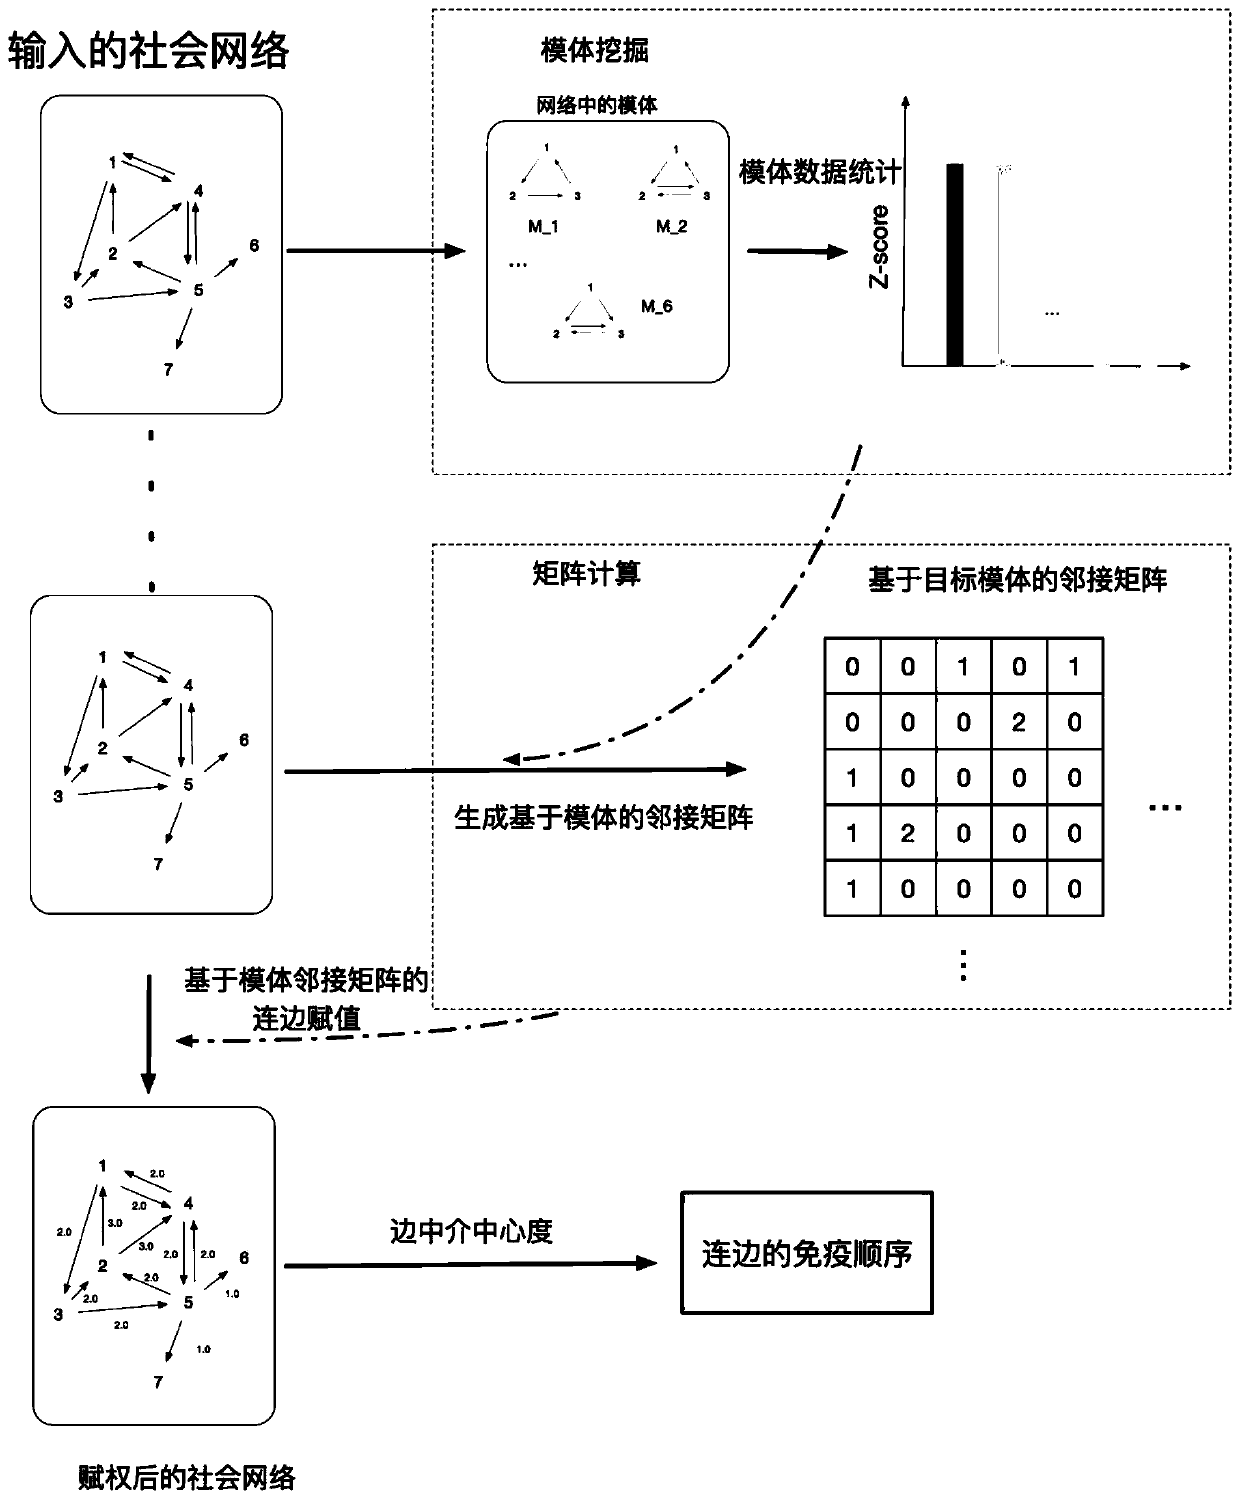 Social network immune algorithm based on network high-order structure